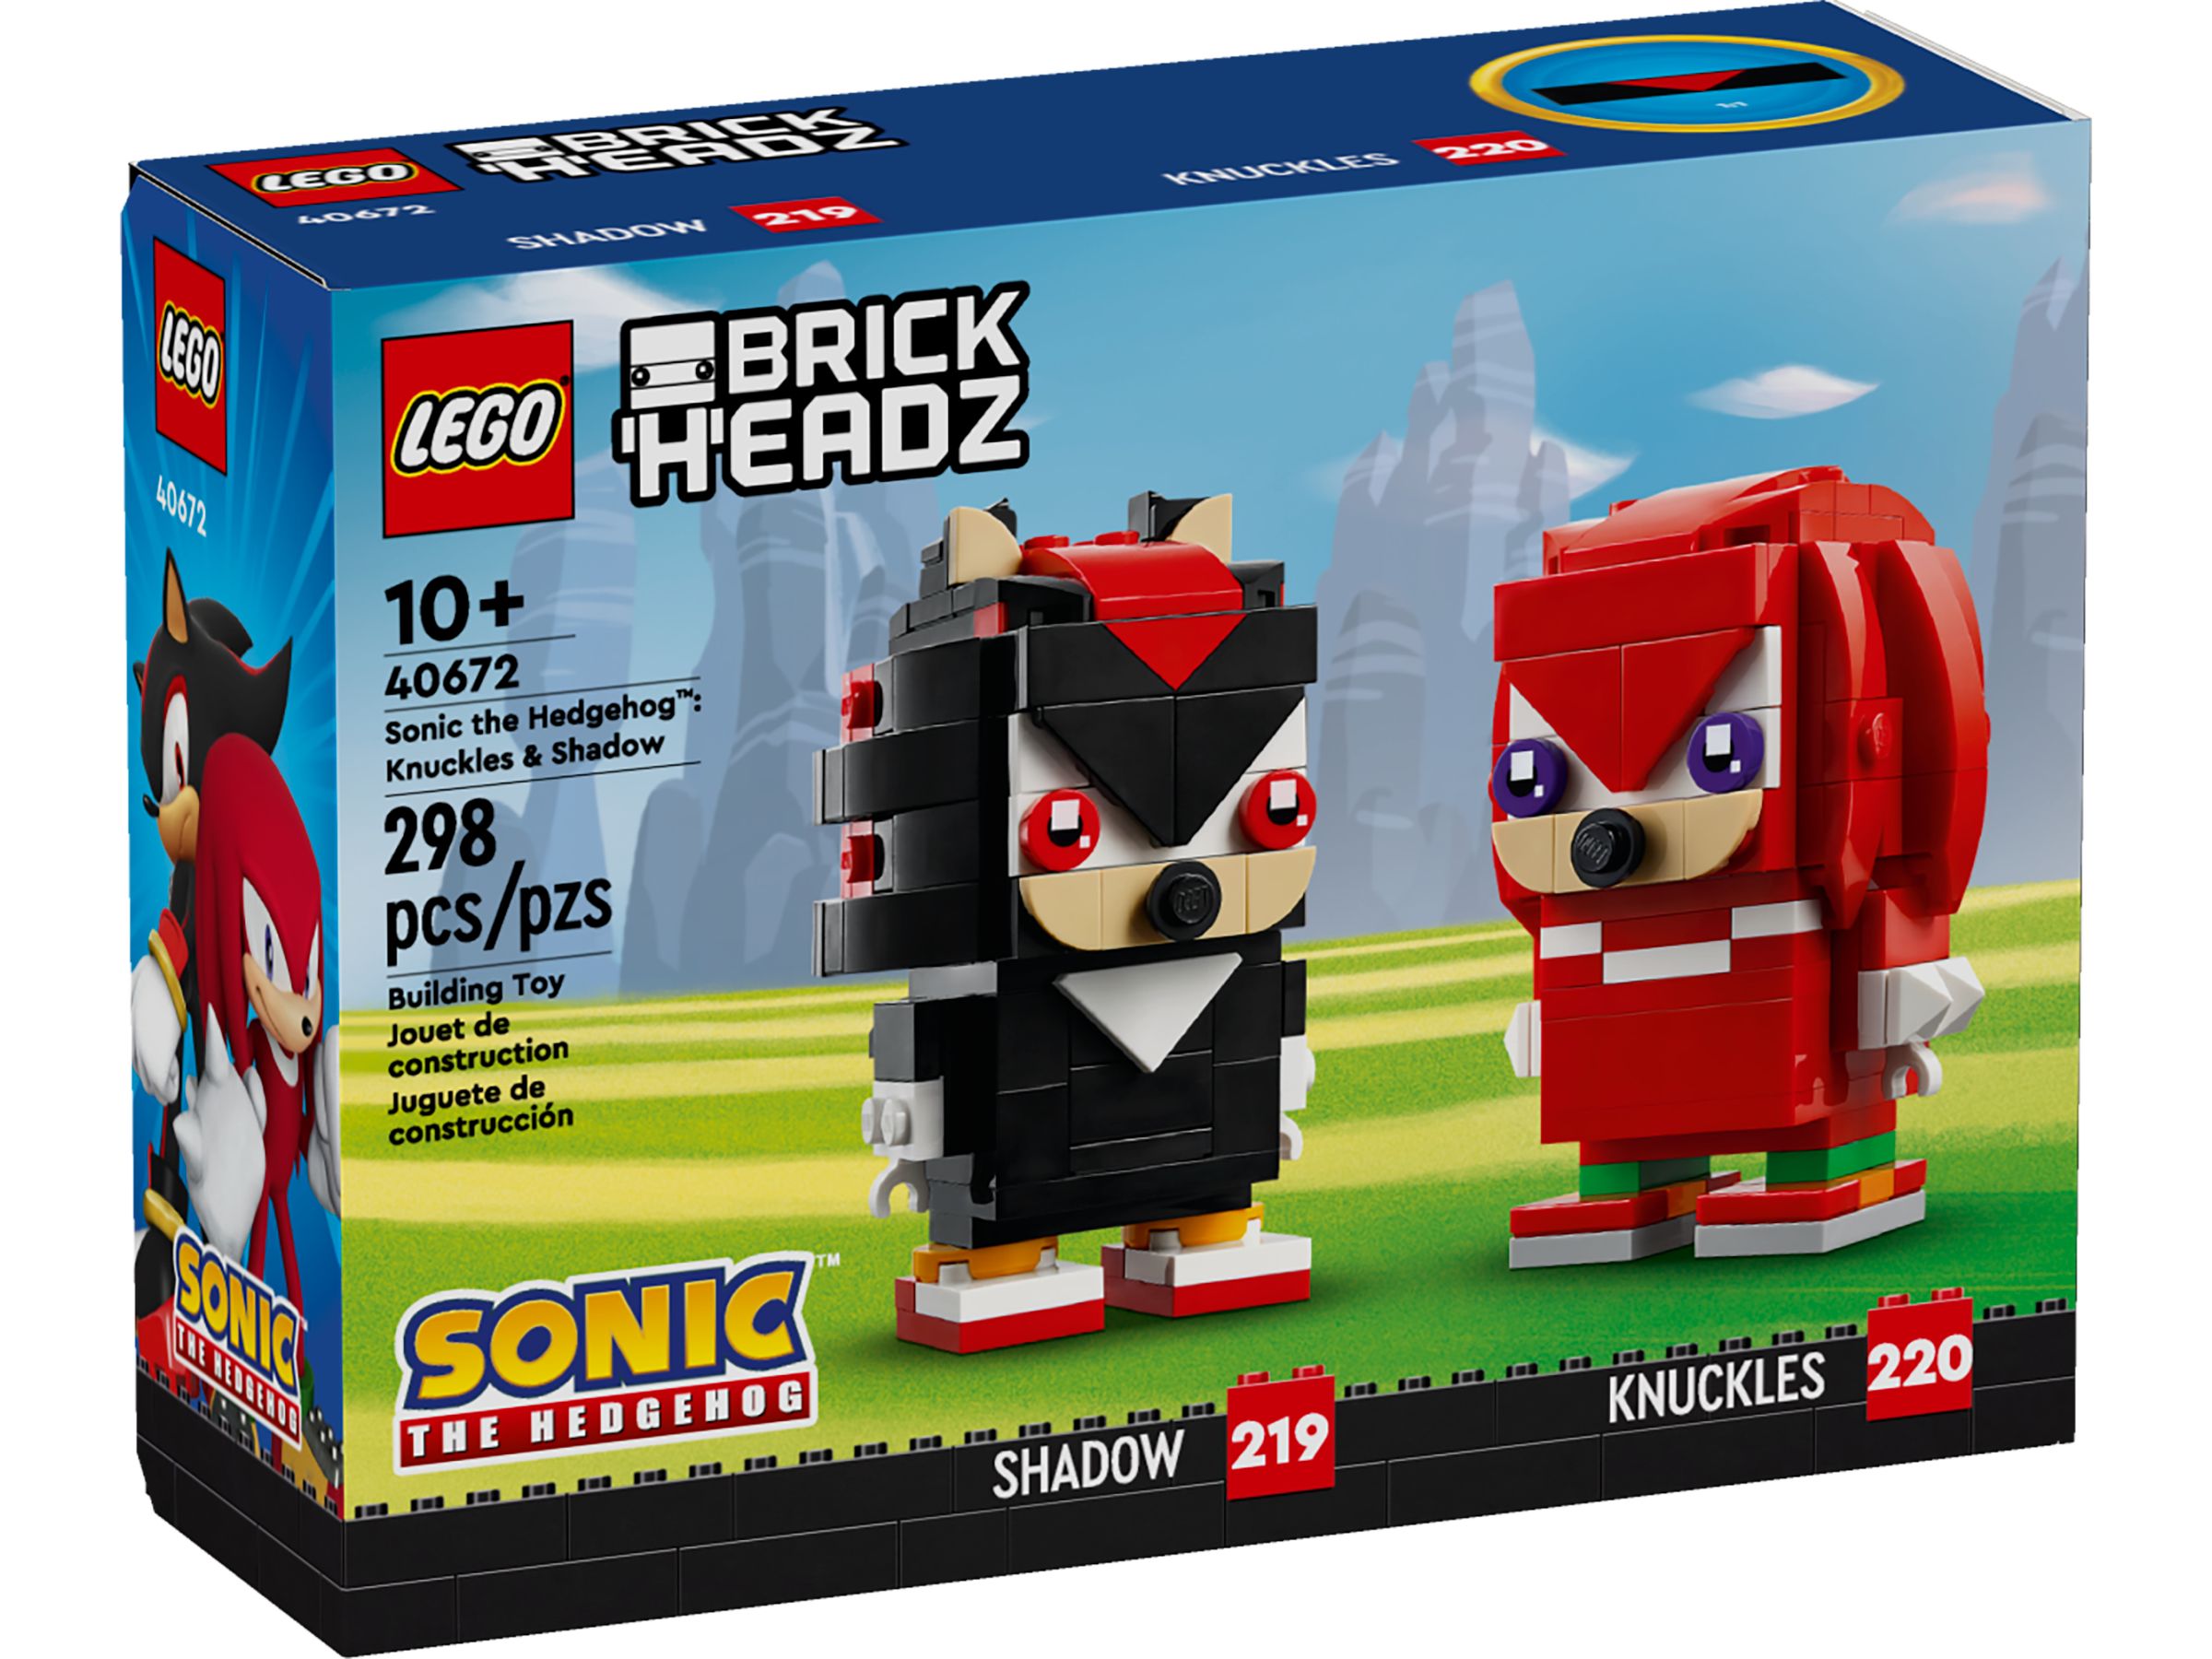 LEGO BrickHeadz 40672 Sonic the Hedgehog™: Knuckles & Shadow LEGO_40672_Box1_v39.jpg